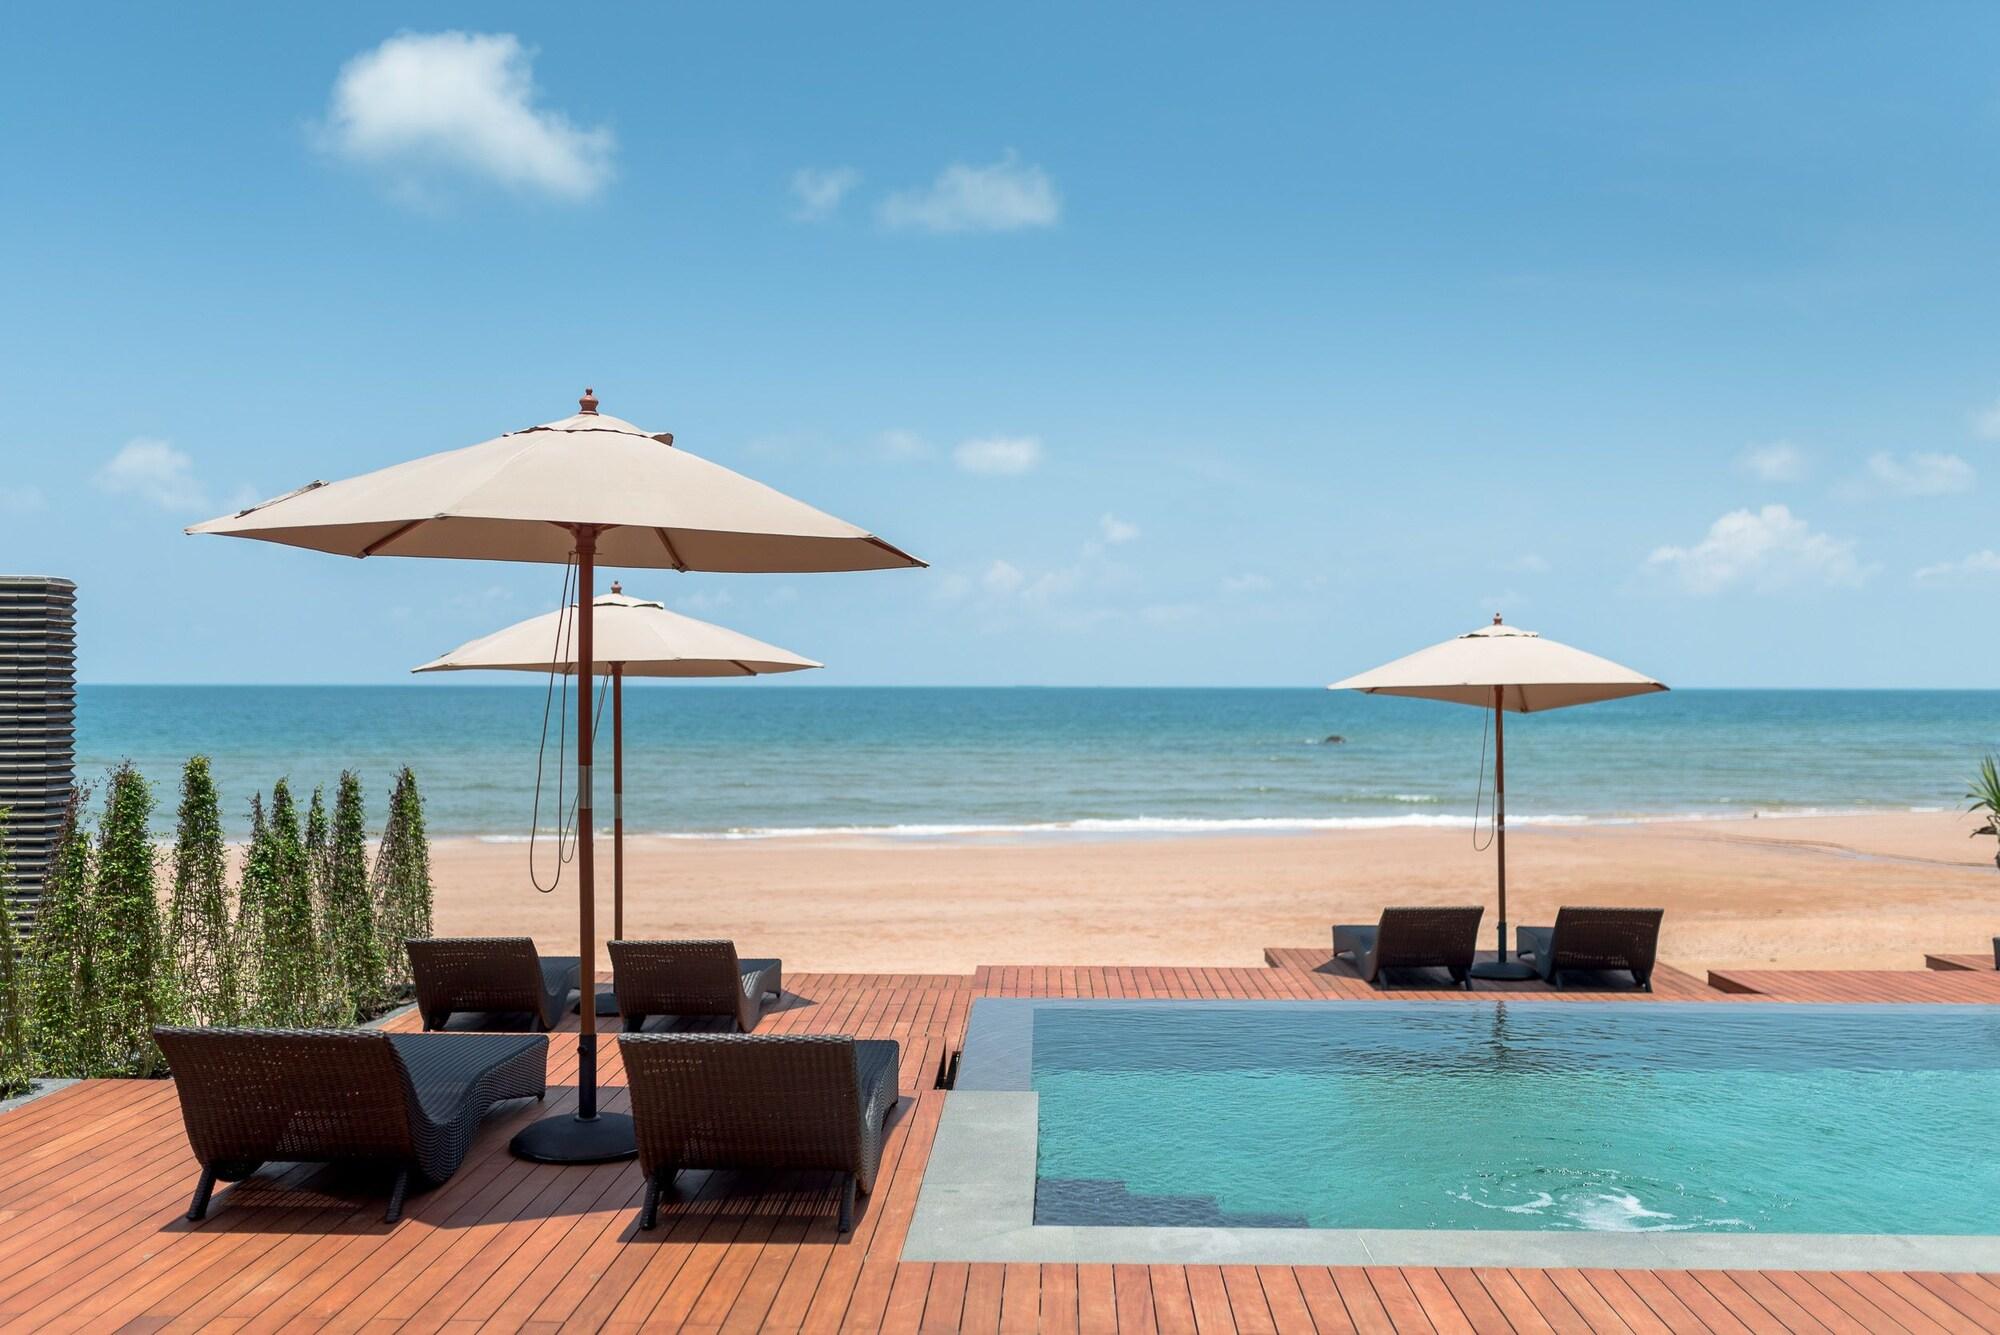 Photo of Bansaithong Beach - popular place among relax connoisseurs